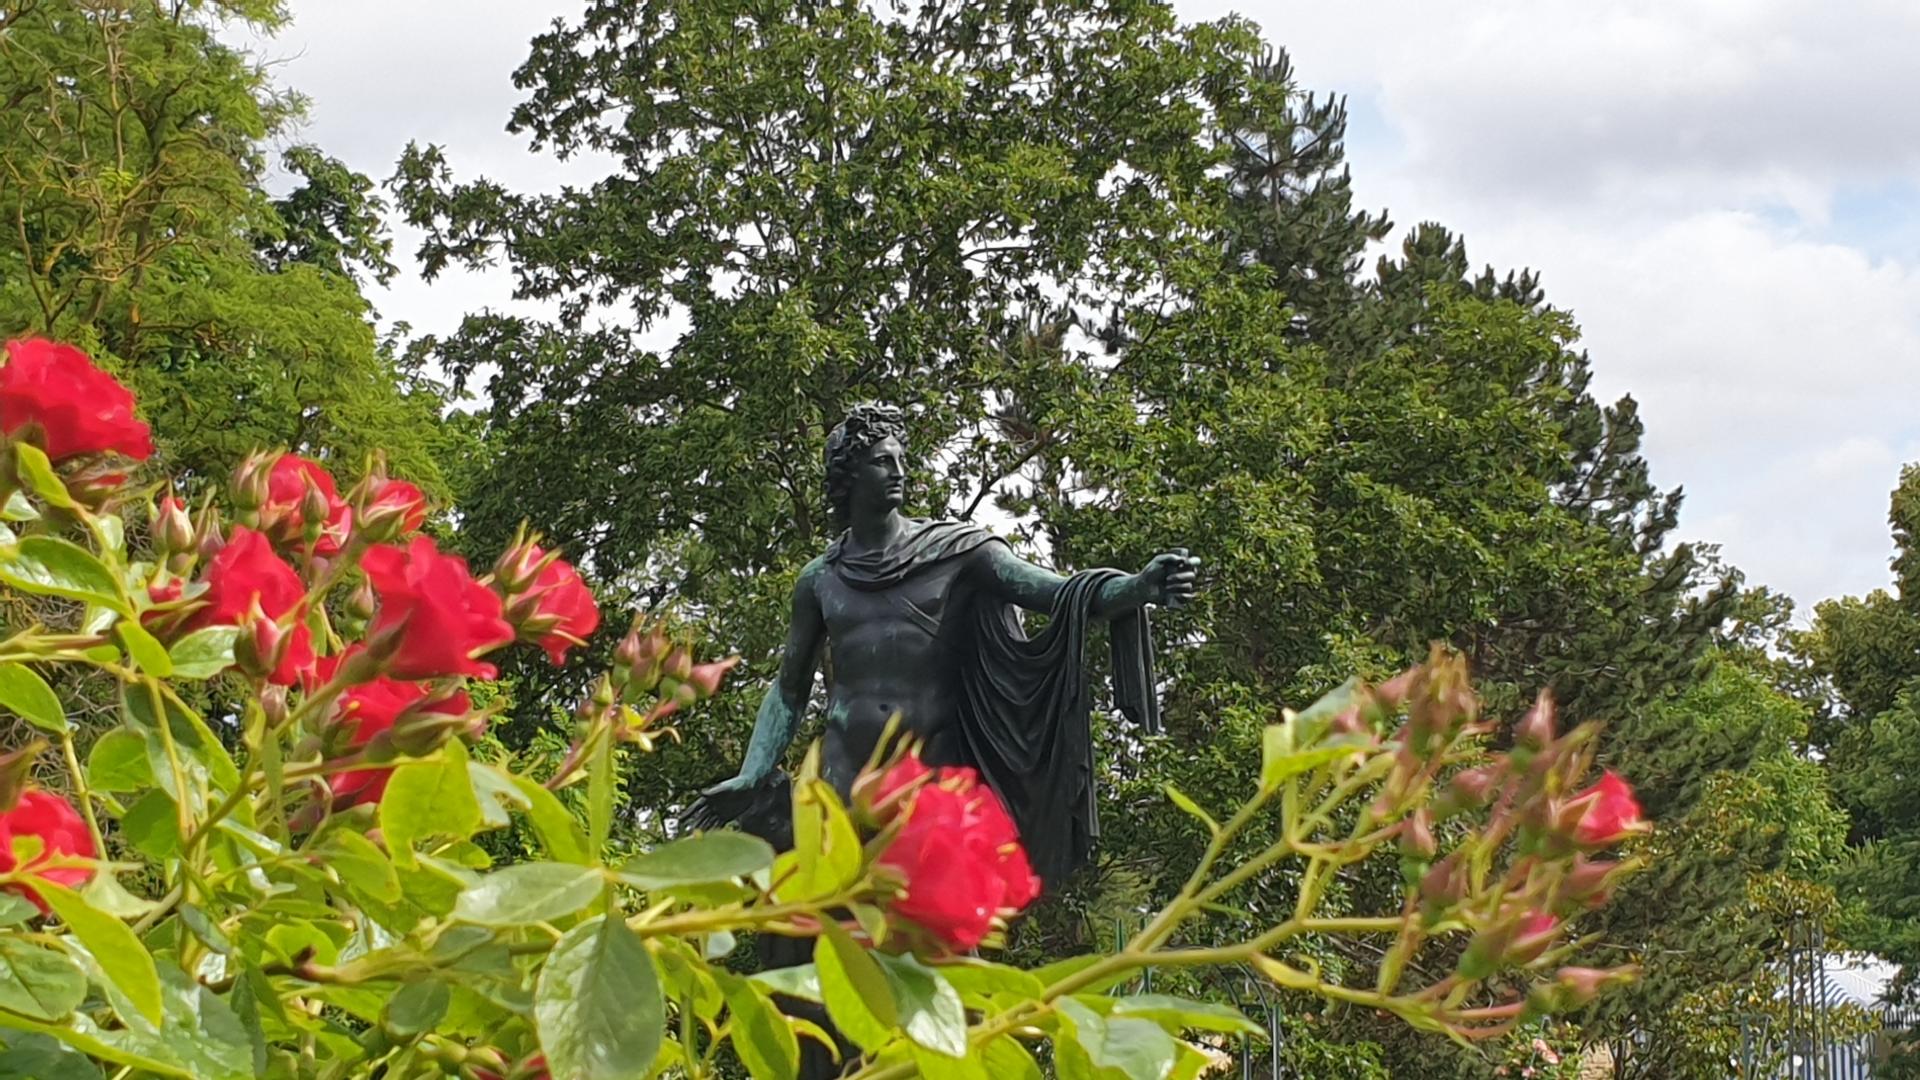 Malmaison - Statue - Fleurs 